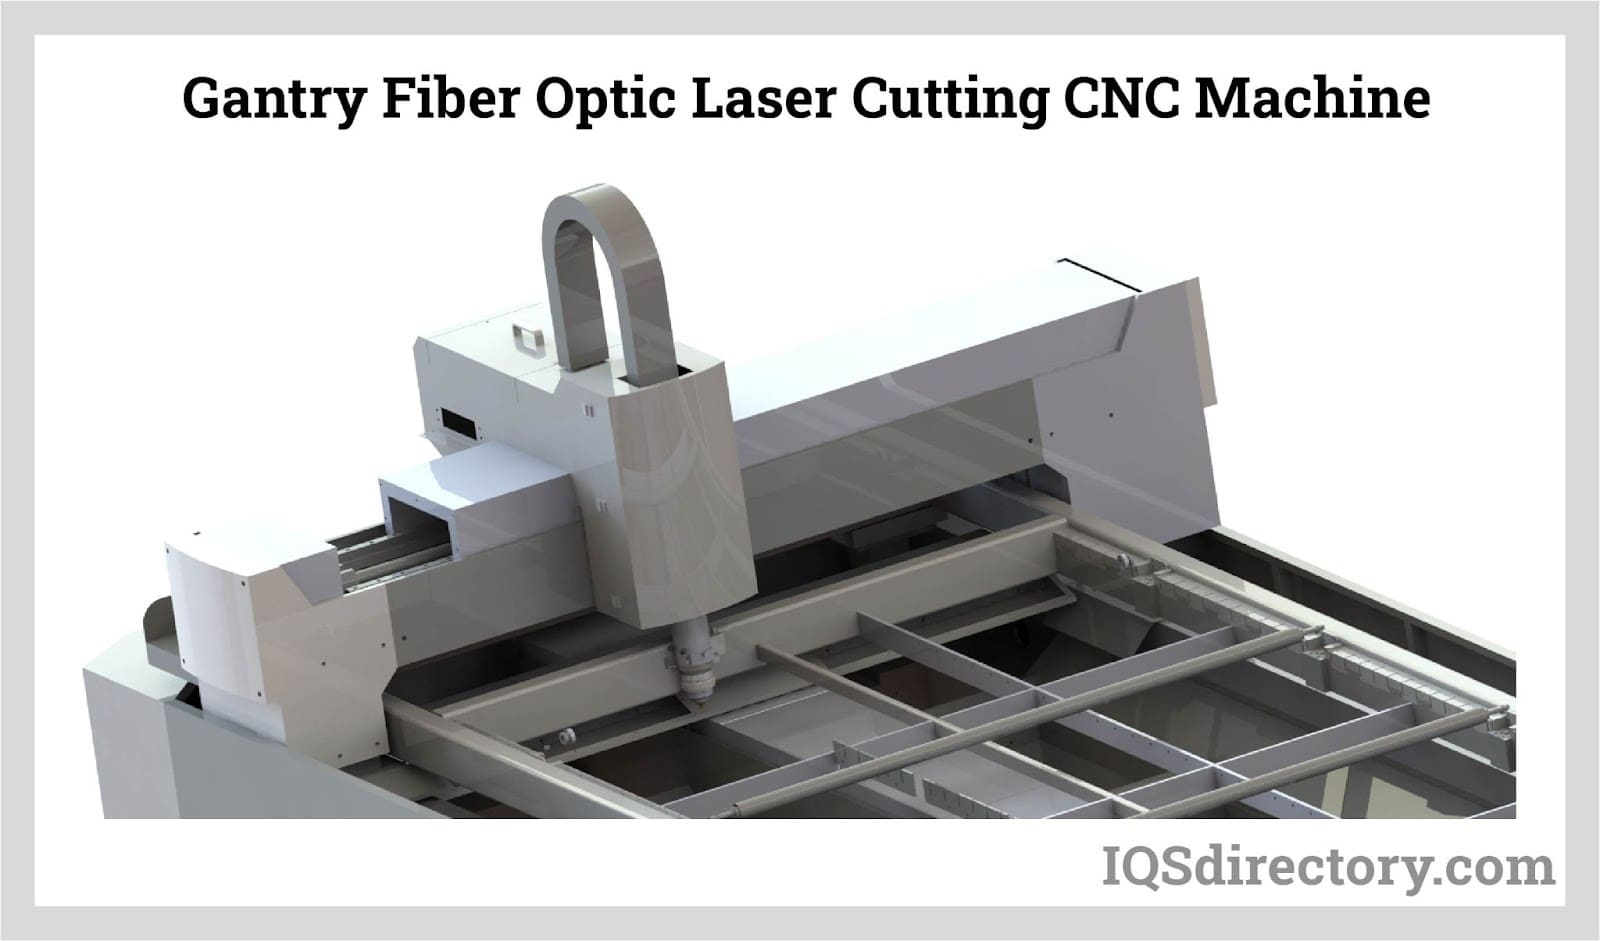 Gantry Fiber Optic Laser Cutting CNC Machine